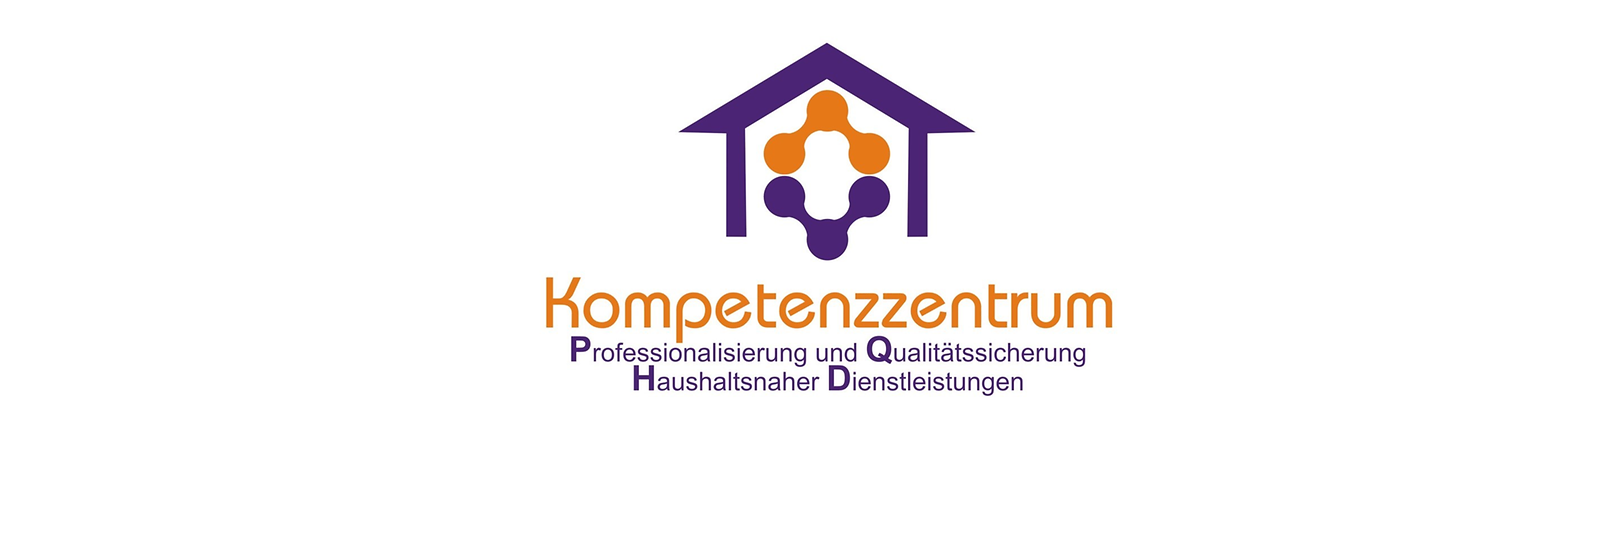 Logo PQHD Kompetenzzentrum